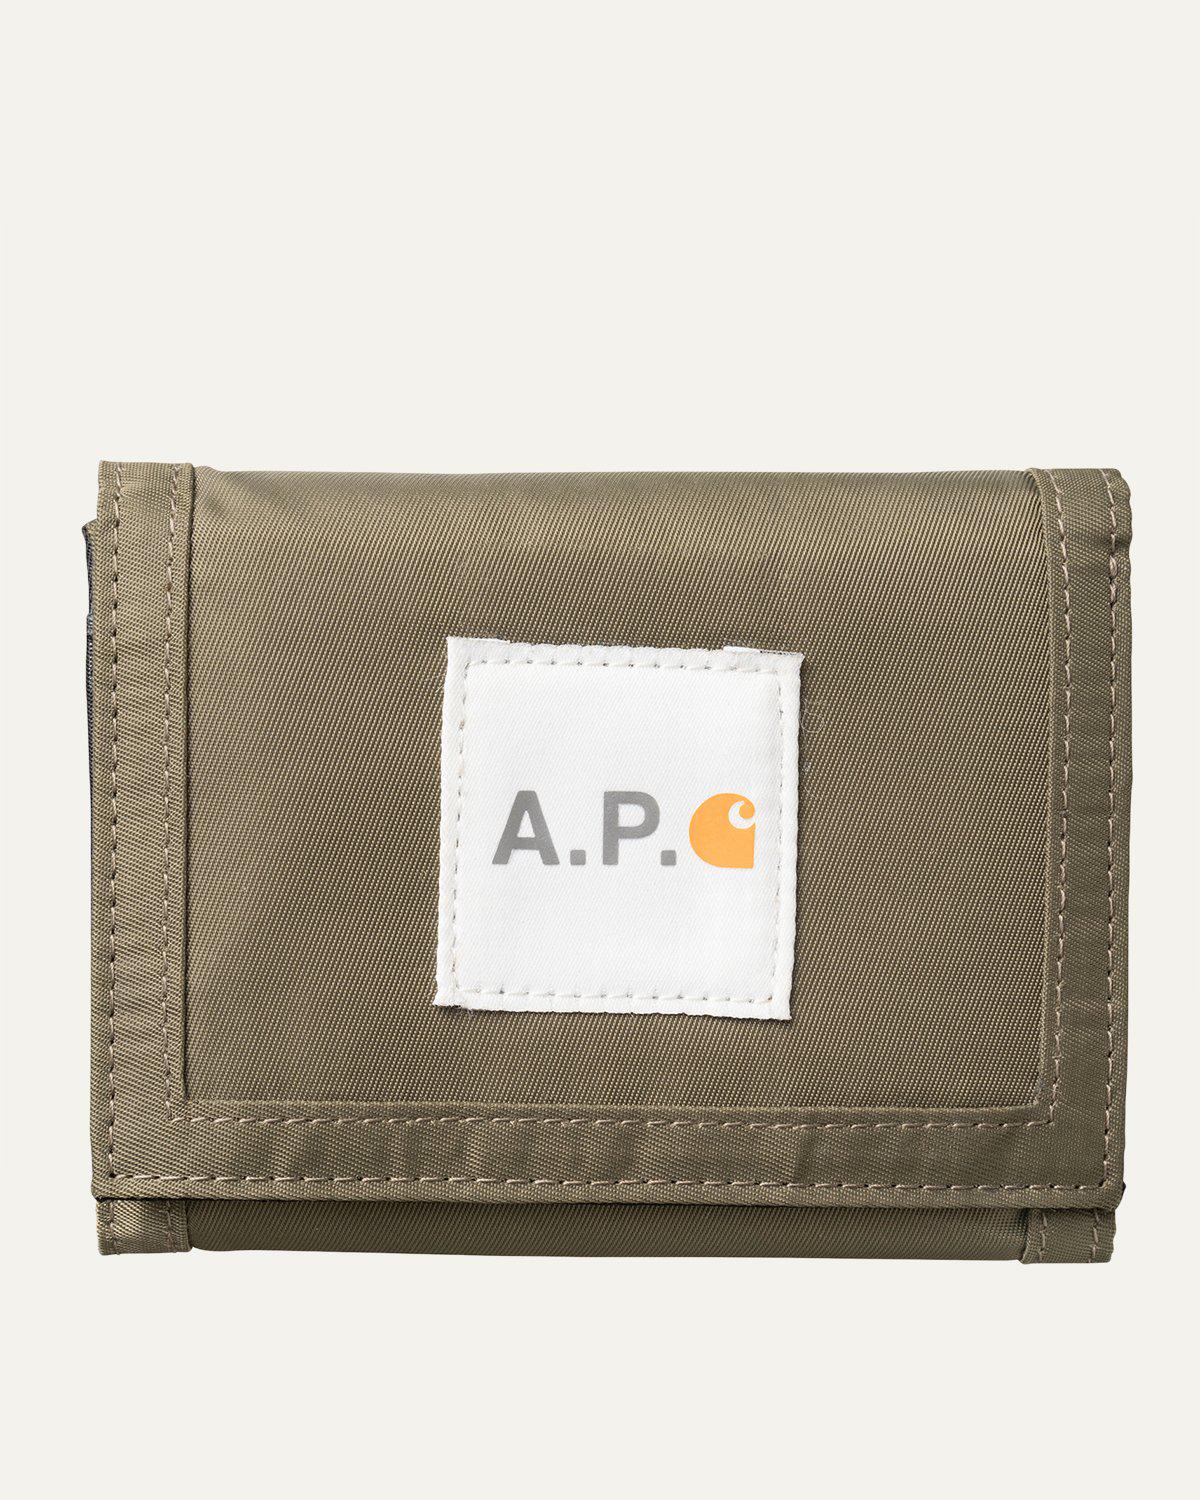 A.P.C. x Carhartt WIP – Shawn Tri-Fold Wallet by A.P.C. X CARHARTT WIP